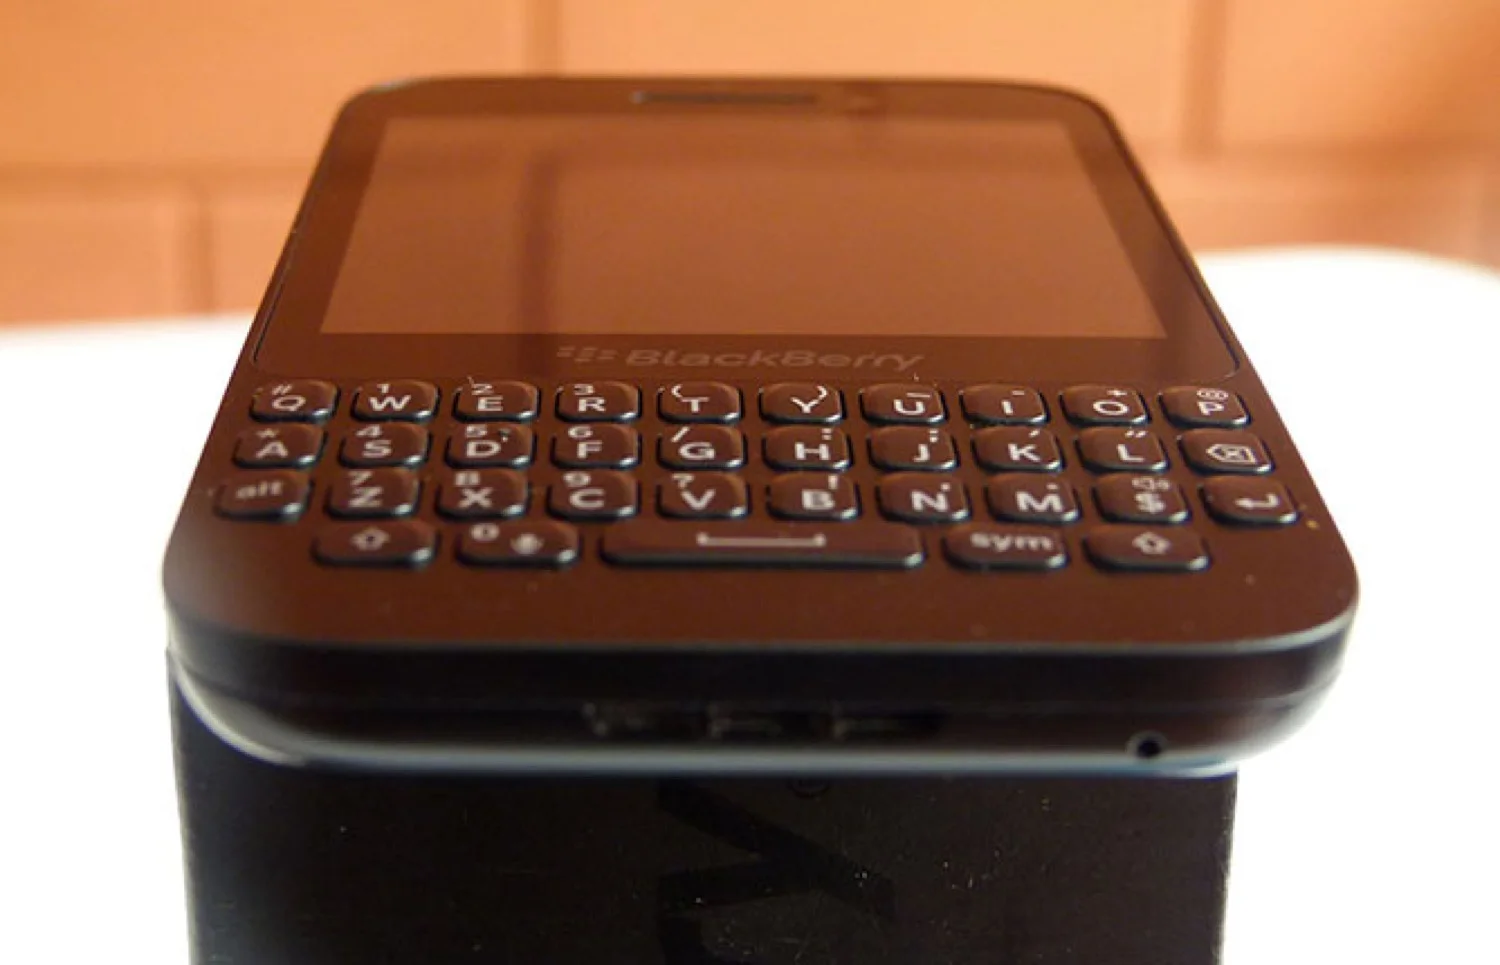 Review del smartphone BlackBerry Q5